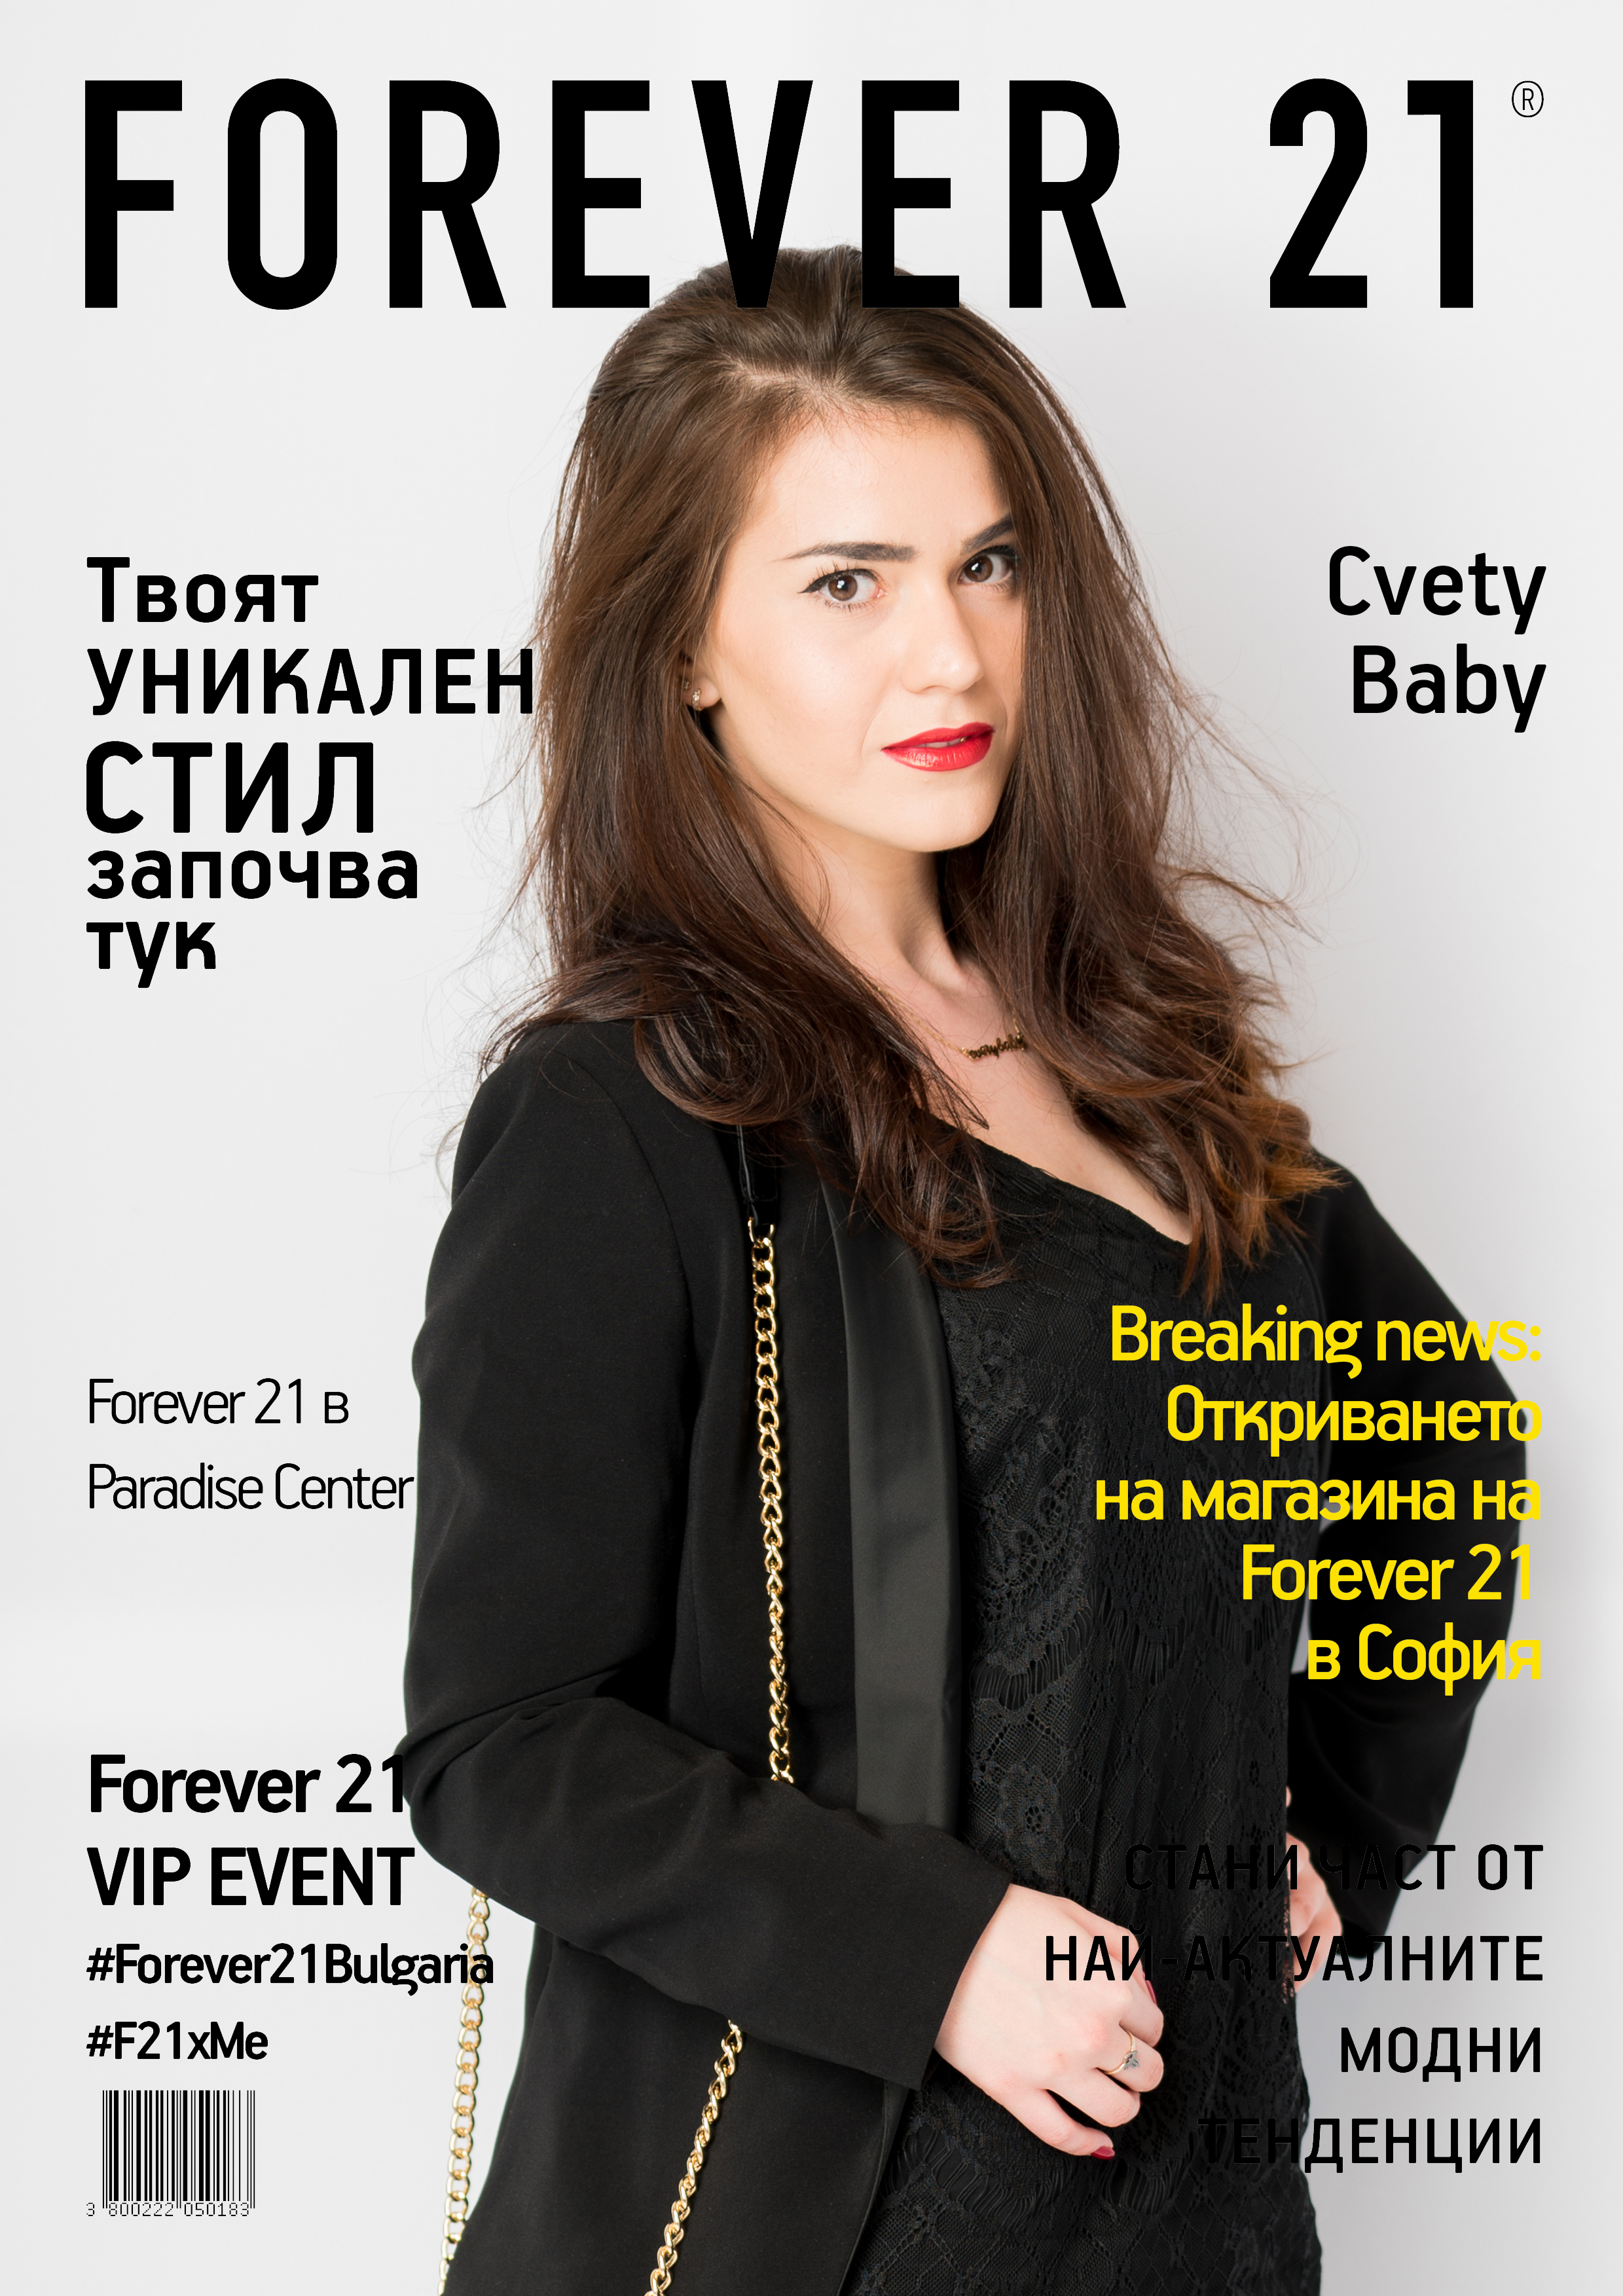 Cover_Magazine_CvetyBaby